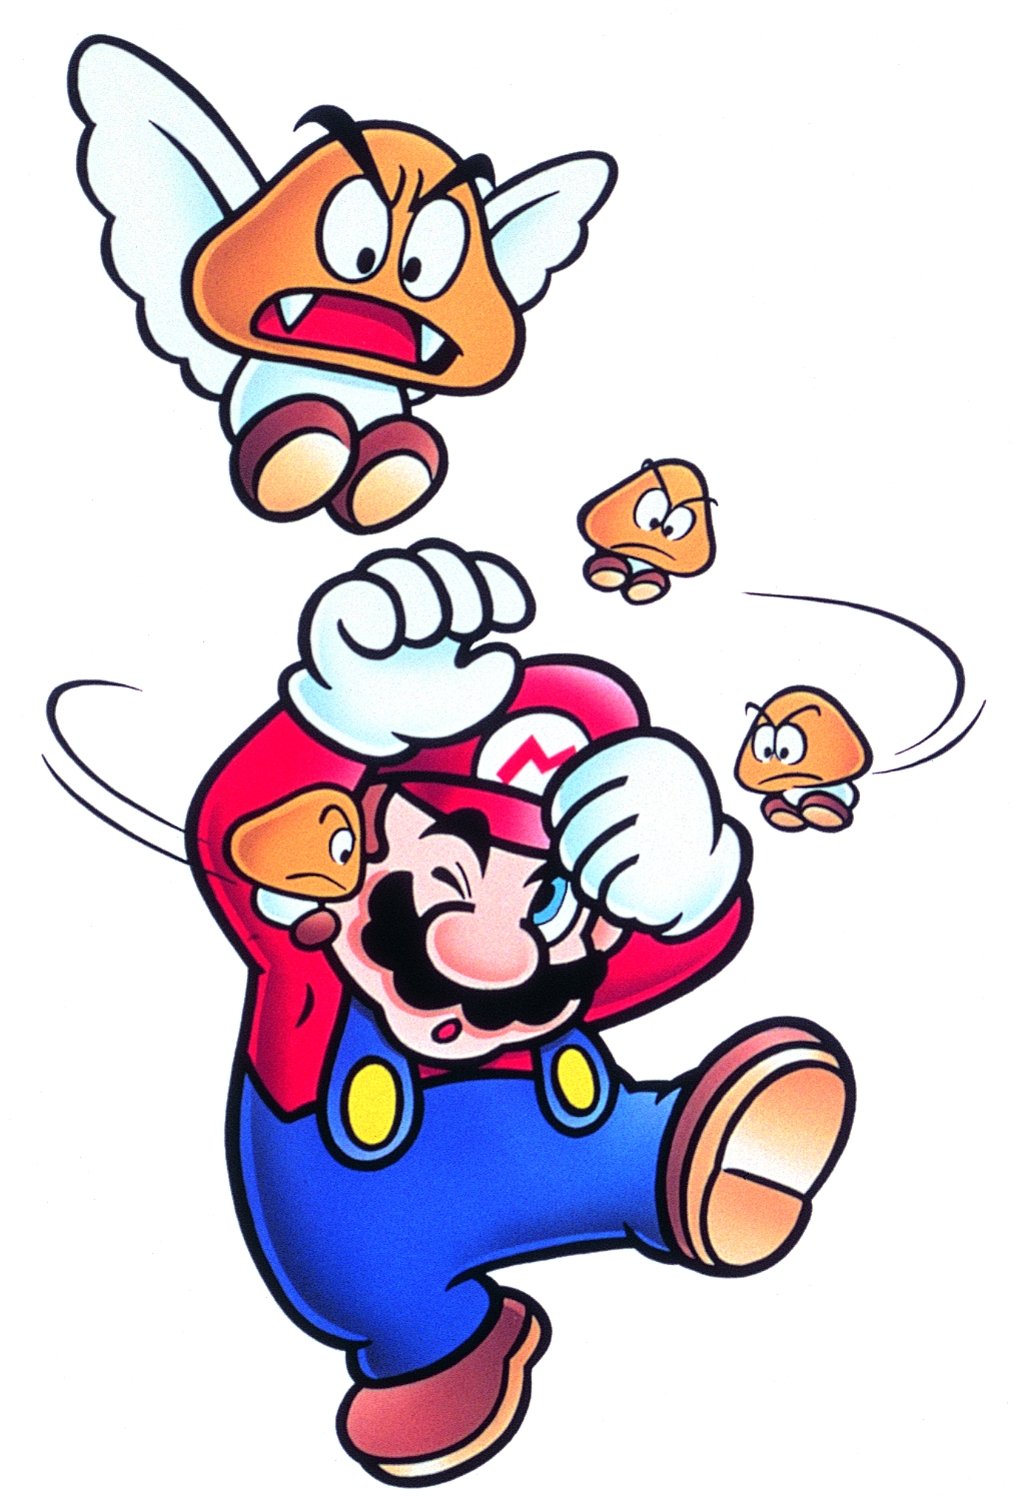 Artwork of Para-Goomba and Micro-Goombas swarming Mario from Super Mario Bros. 3